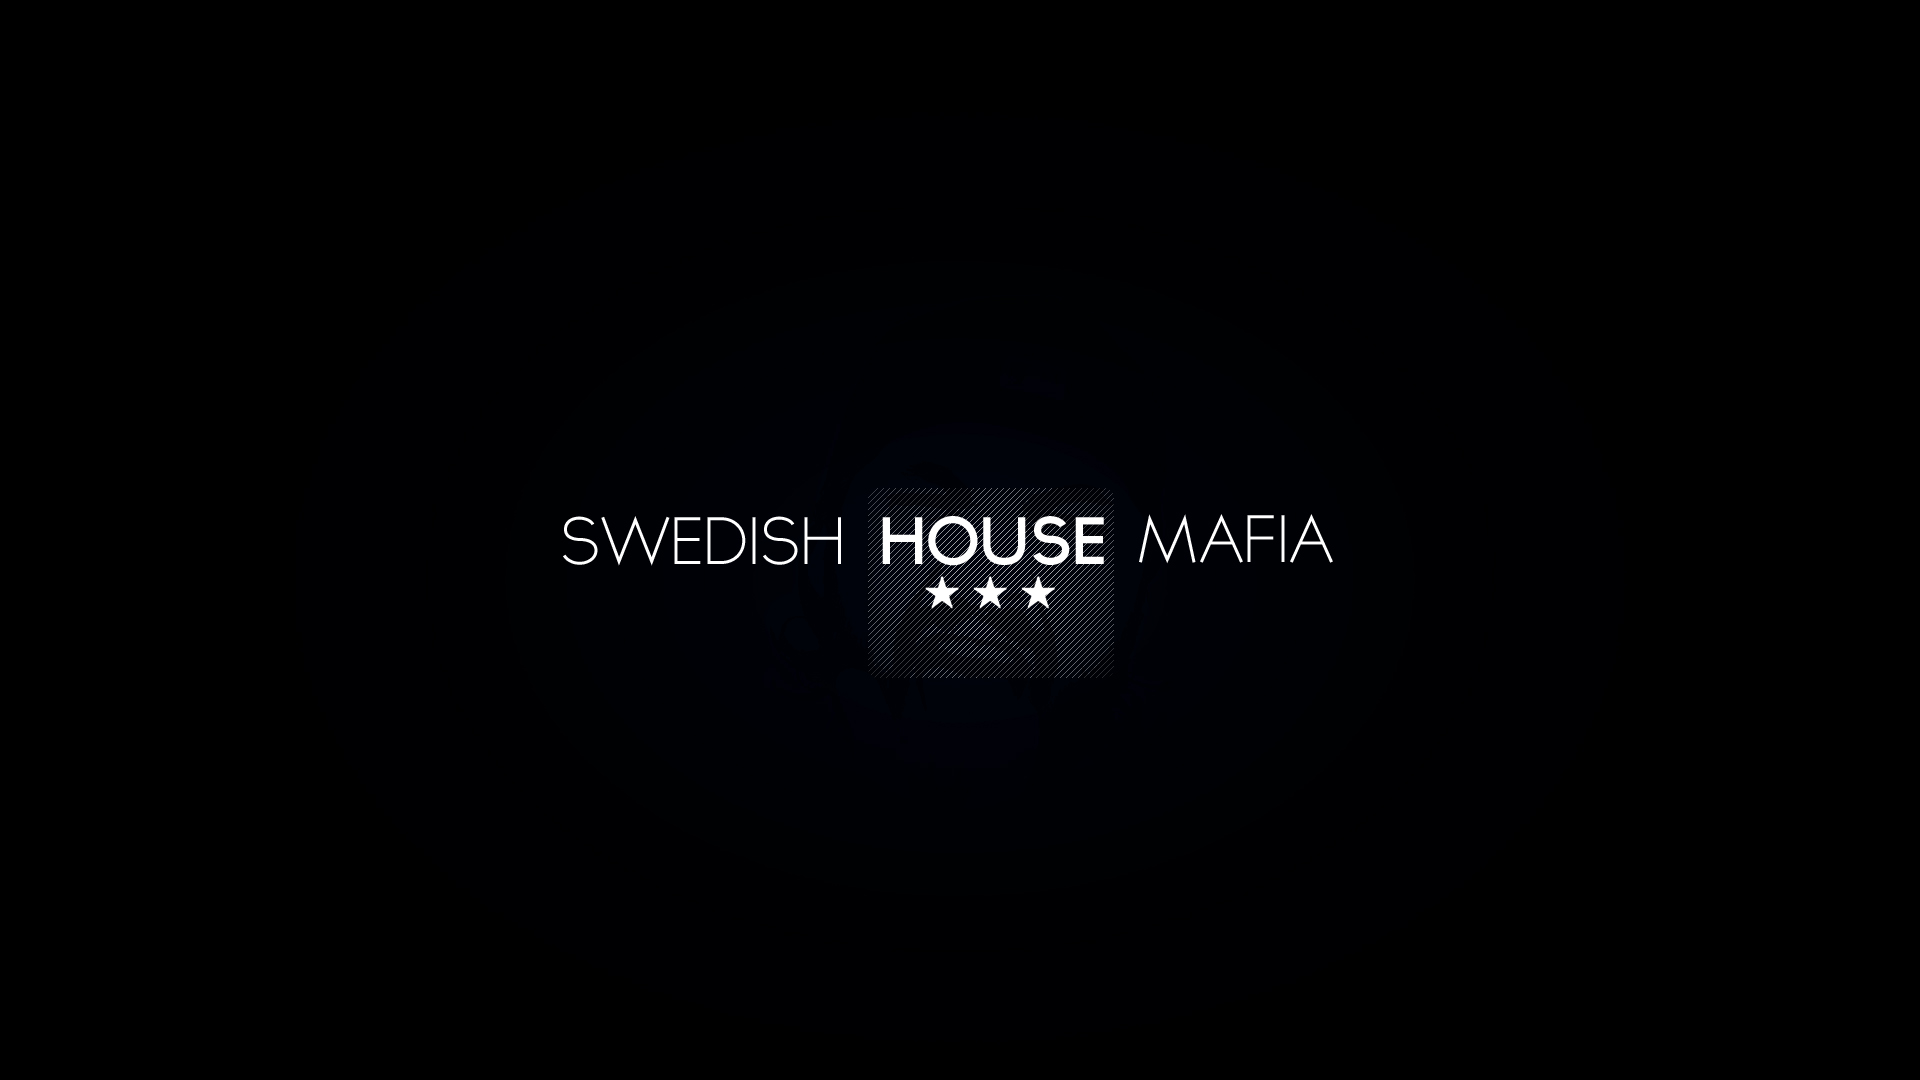 Swedish House Mafia Wallpaper by pR0X0R on DeviantArt